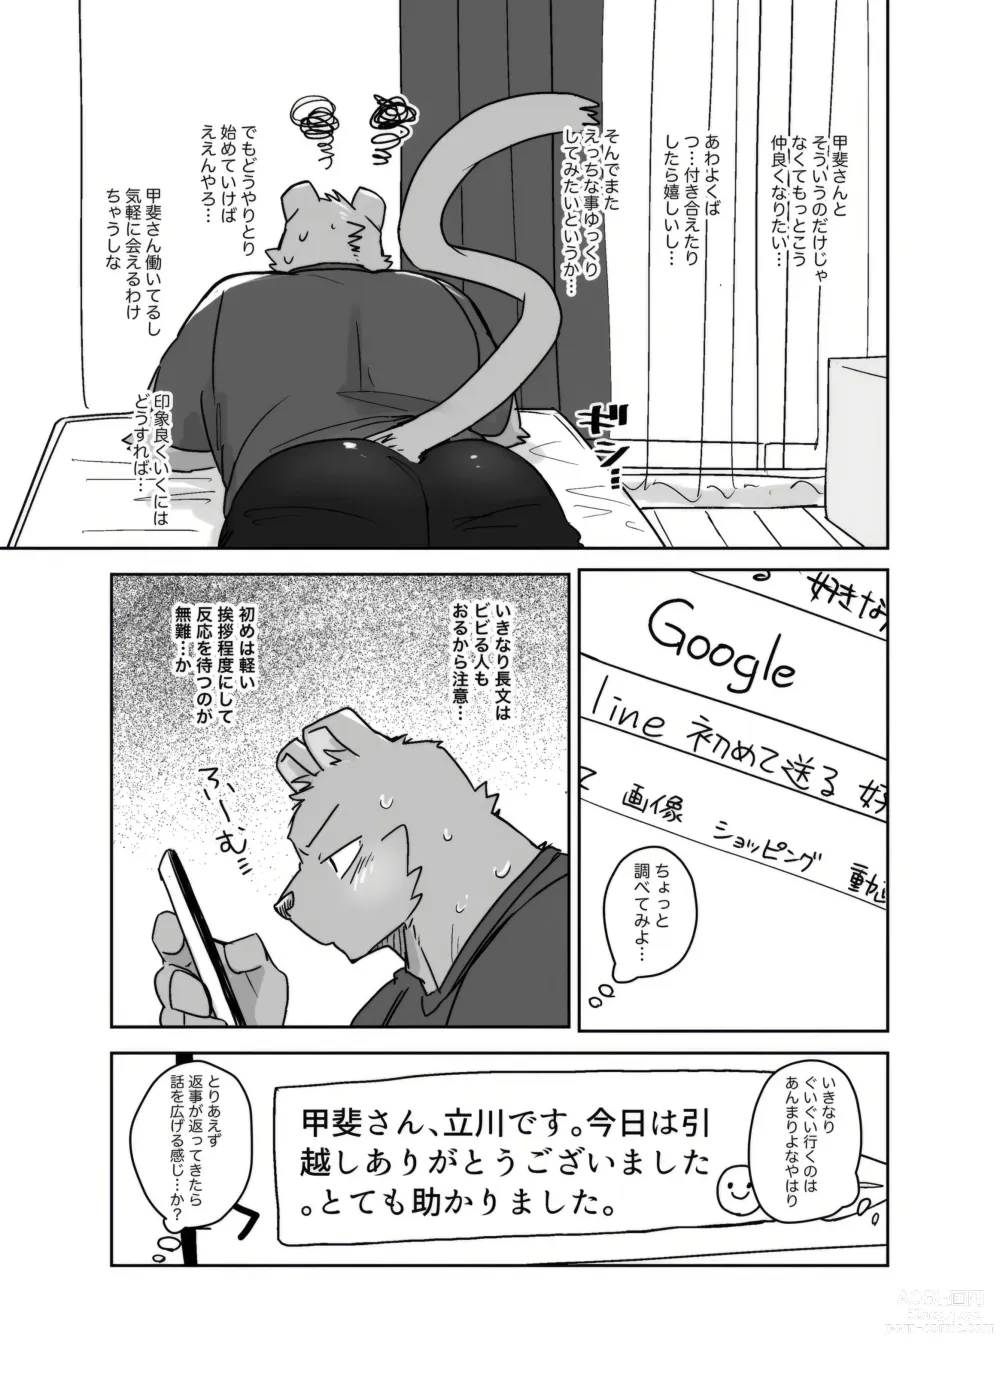 Page 3 of manga 【おまけ漫画】その日の夜